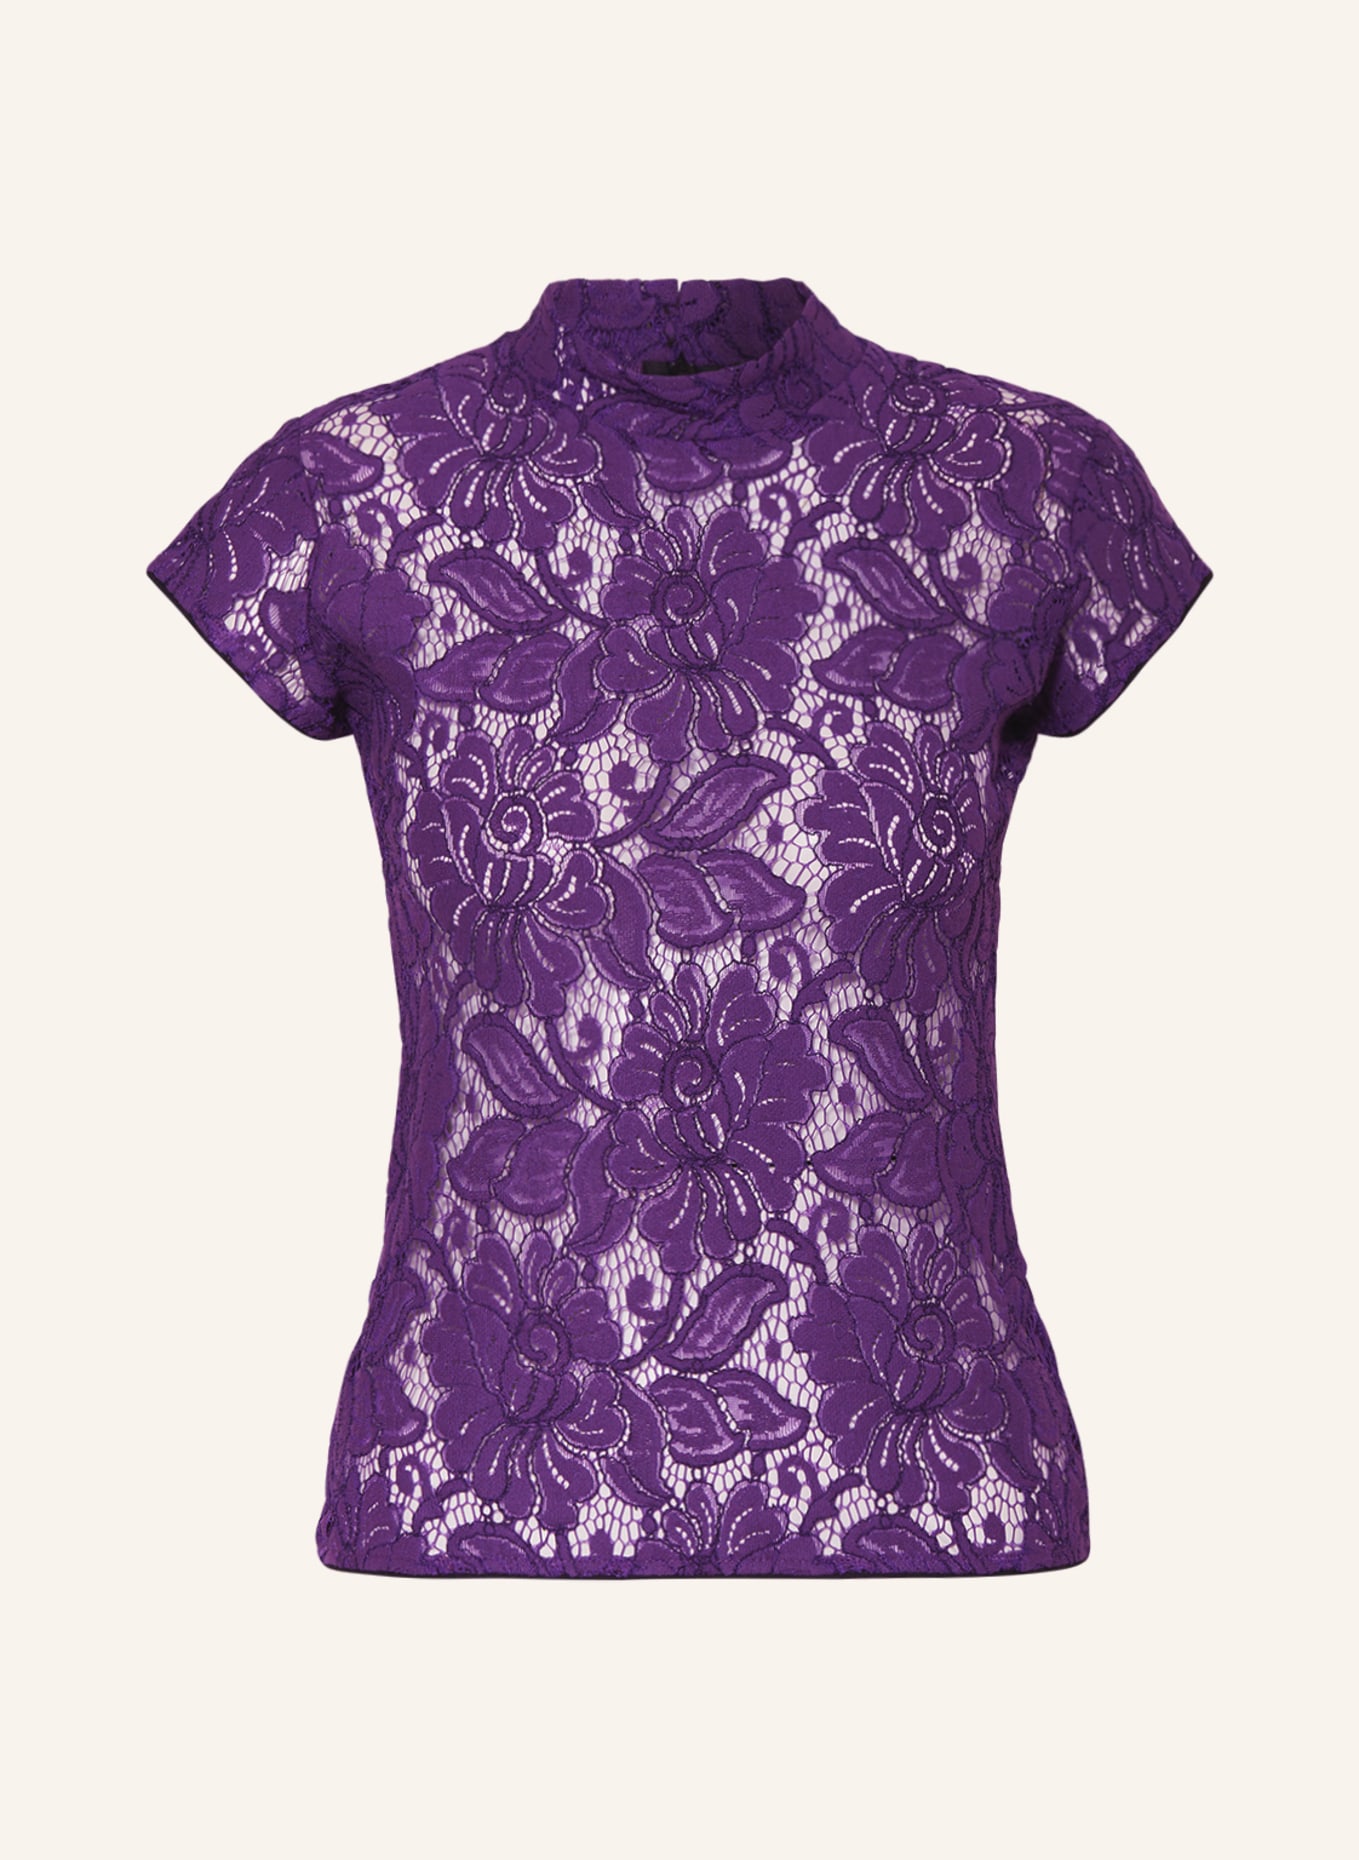 KINGA MATHE Trachten blouse CHARLOTTE made of lace, Color: PURPLE (Image 1)